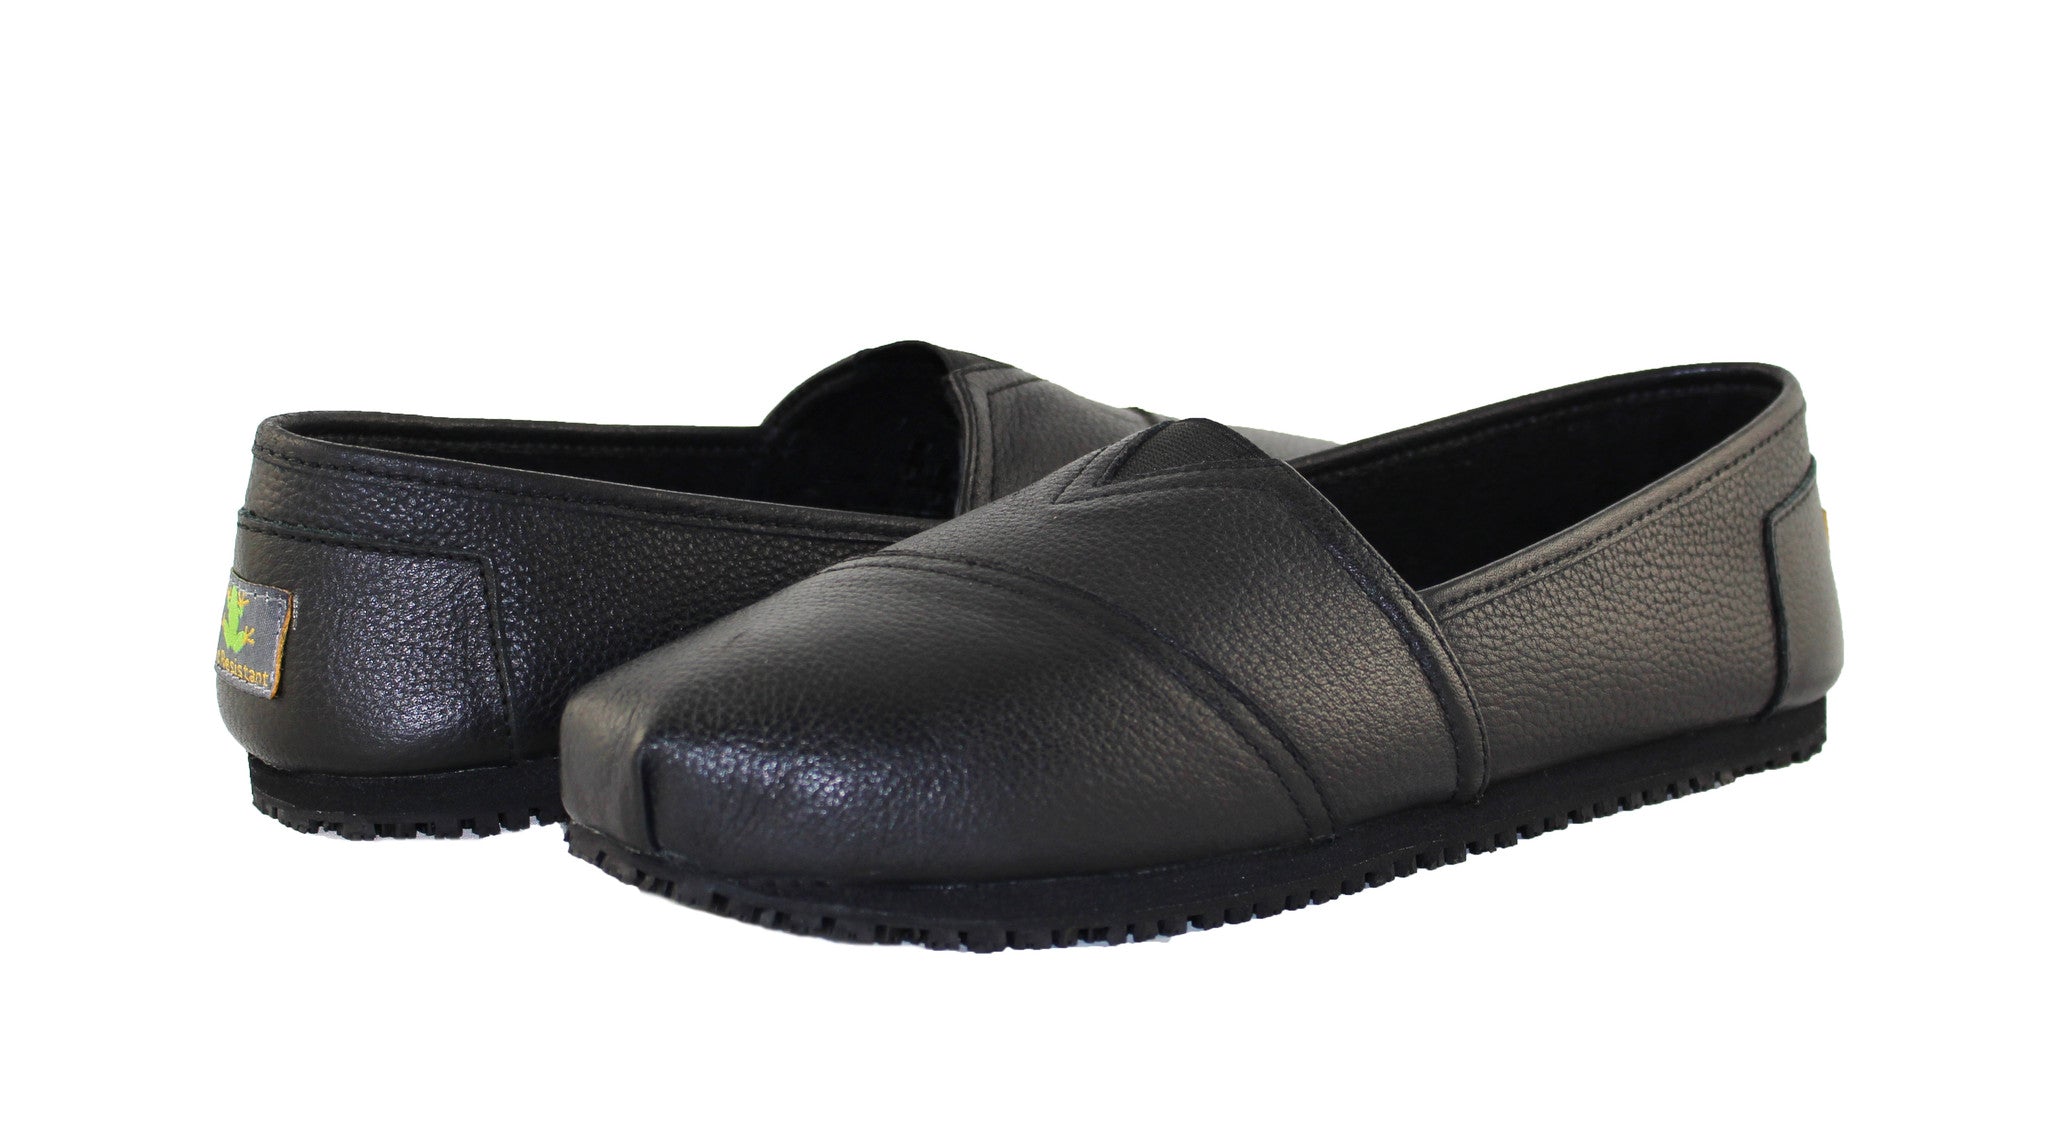 memory foam black work shoes